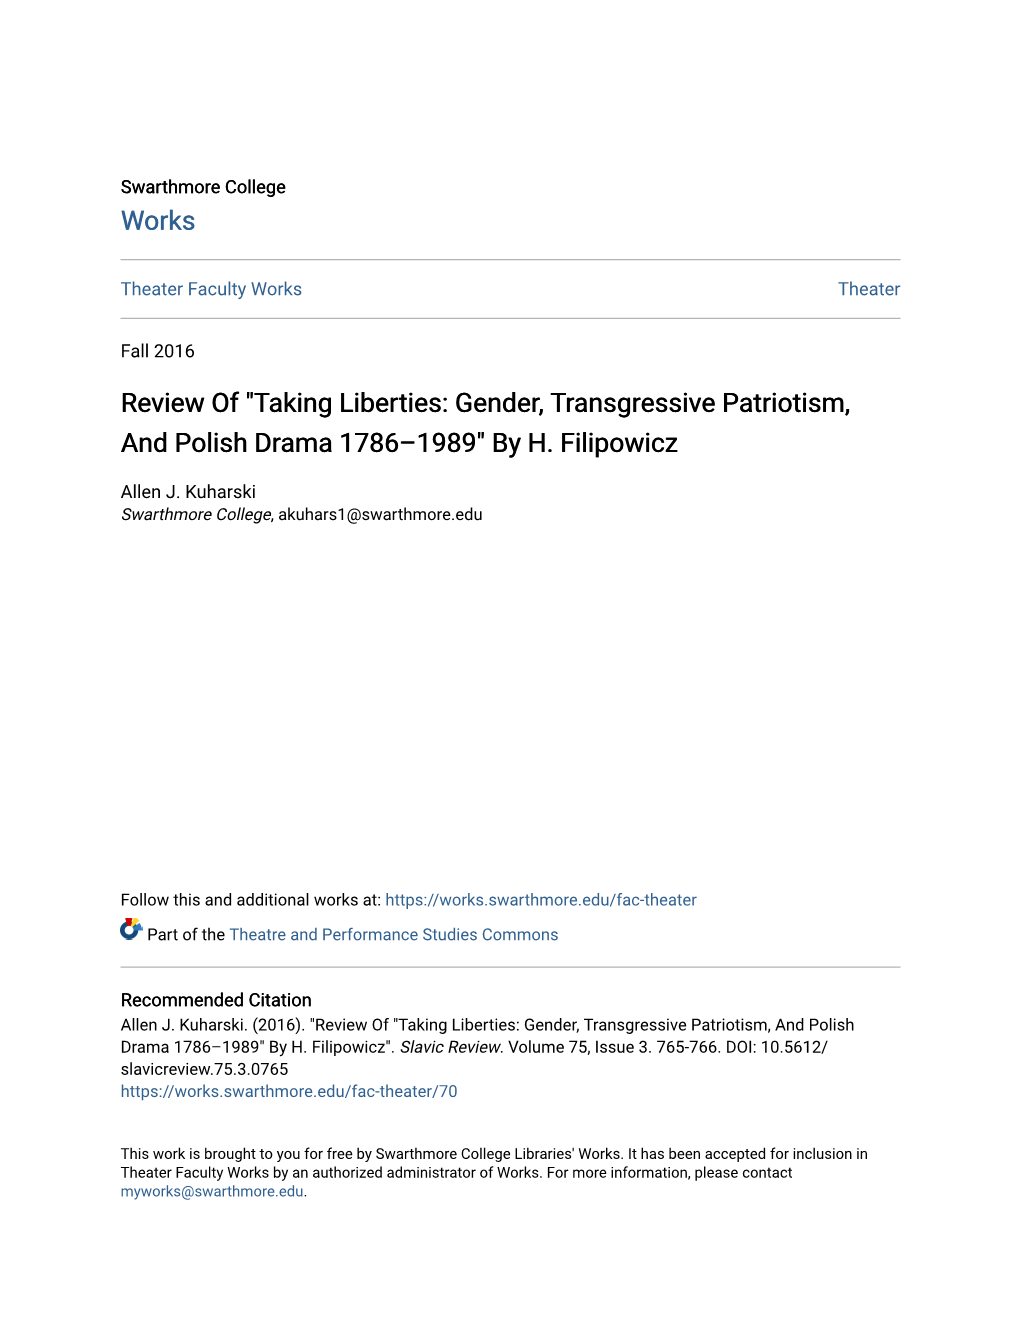 Review Of" Taking Liberties: Gender, Transgressive Patriotism, And